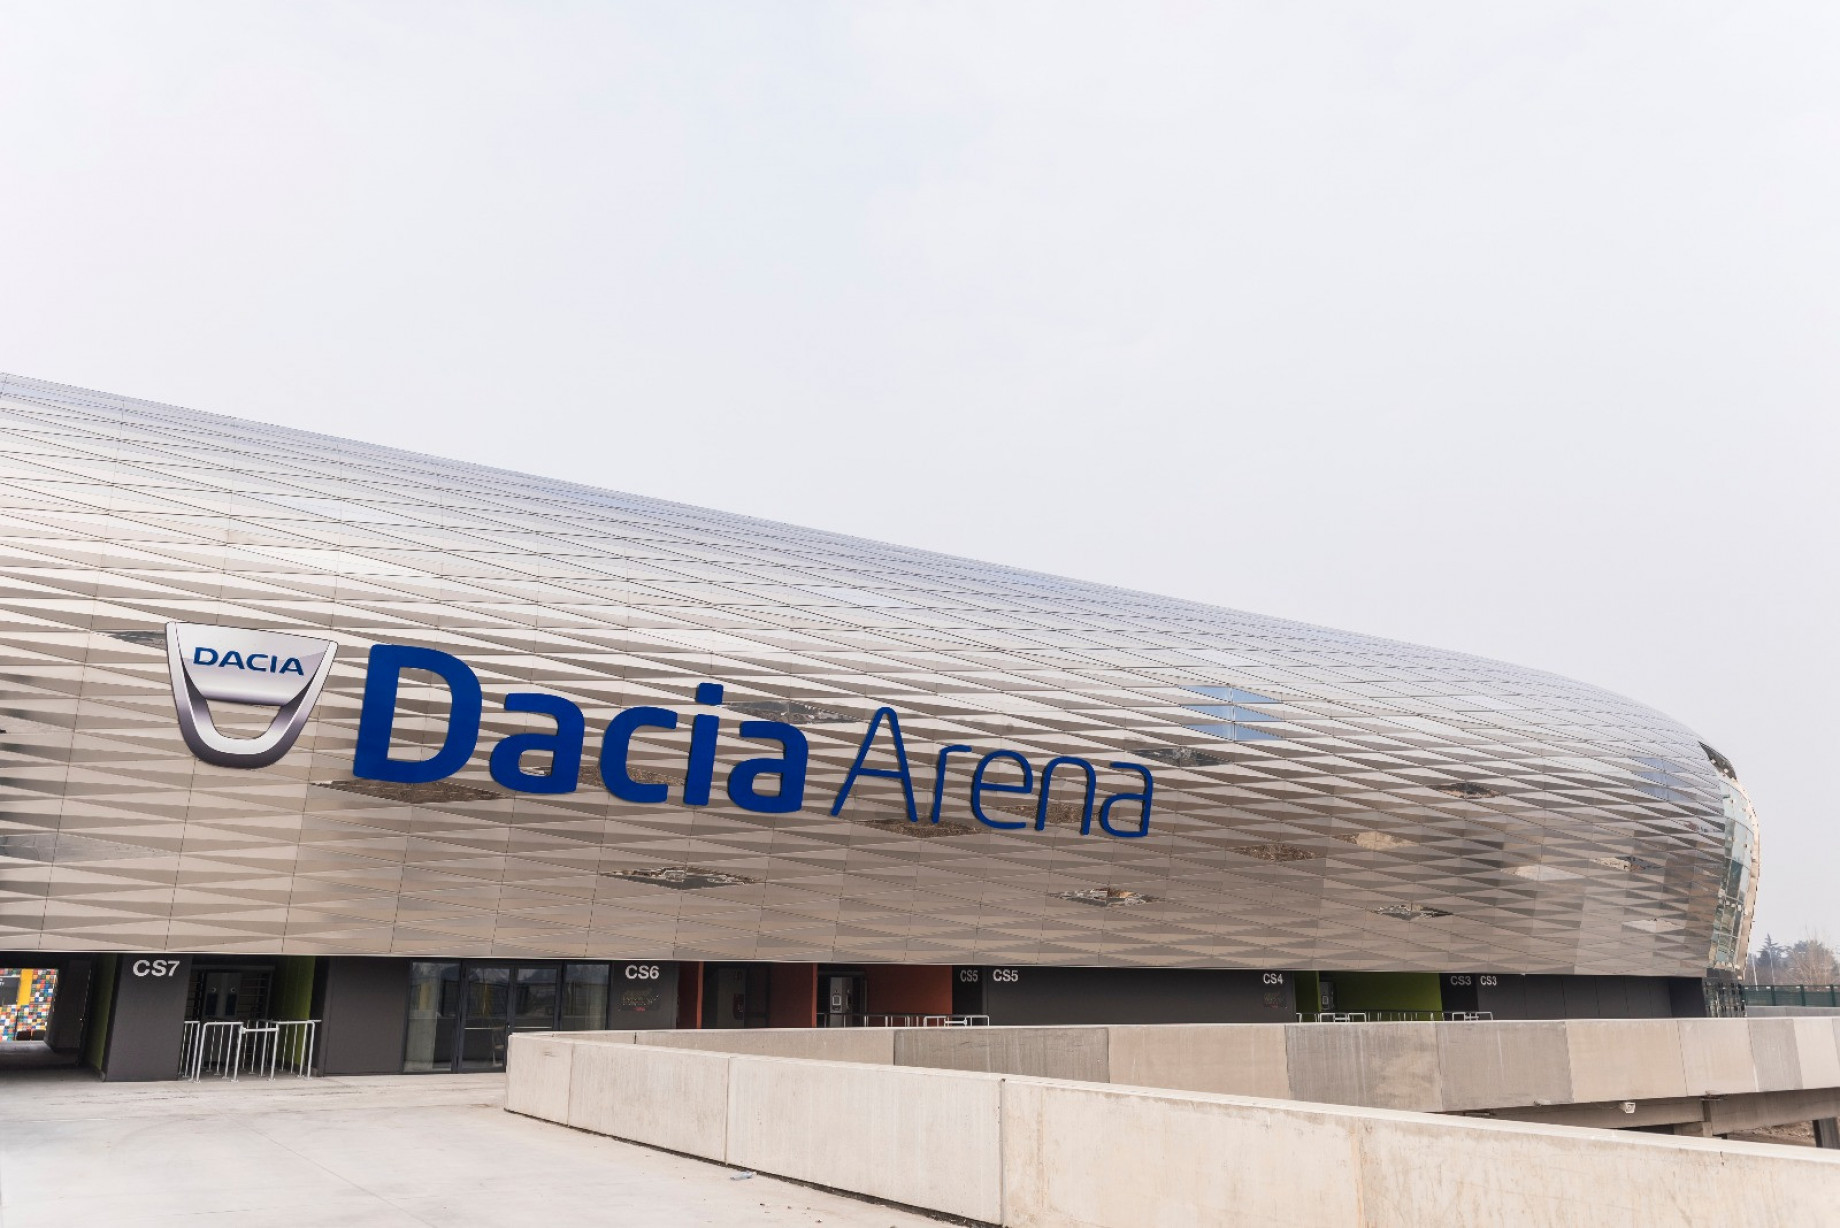 Dacia_Arena_3_OK.jpeg